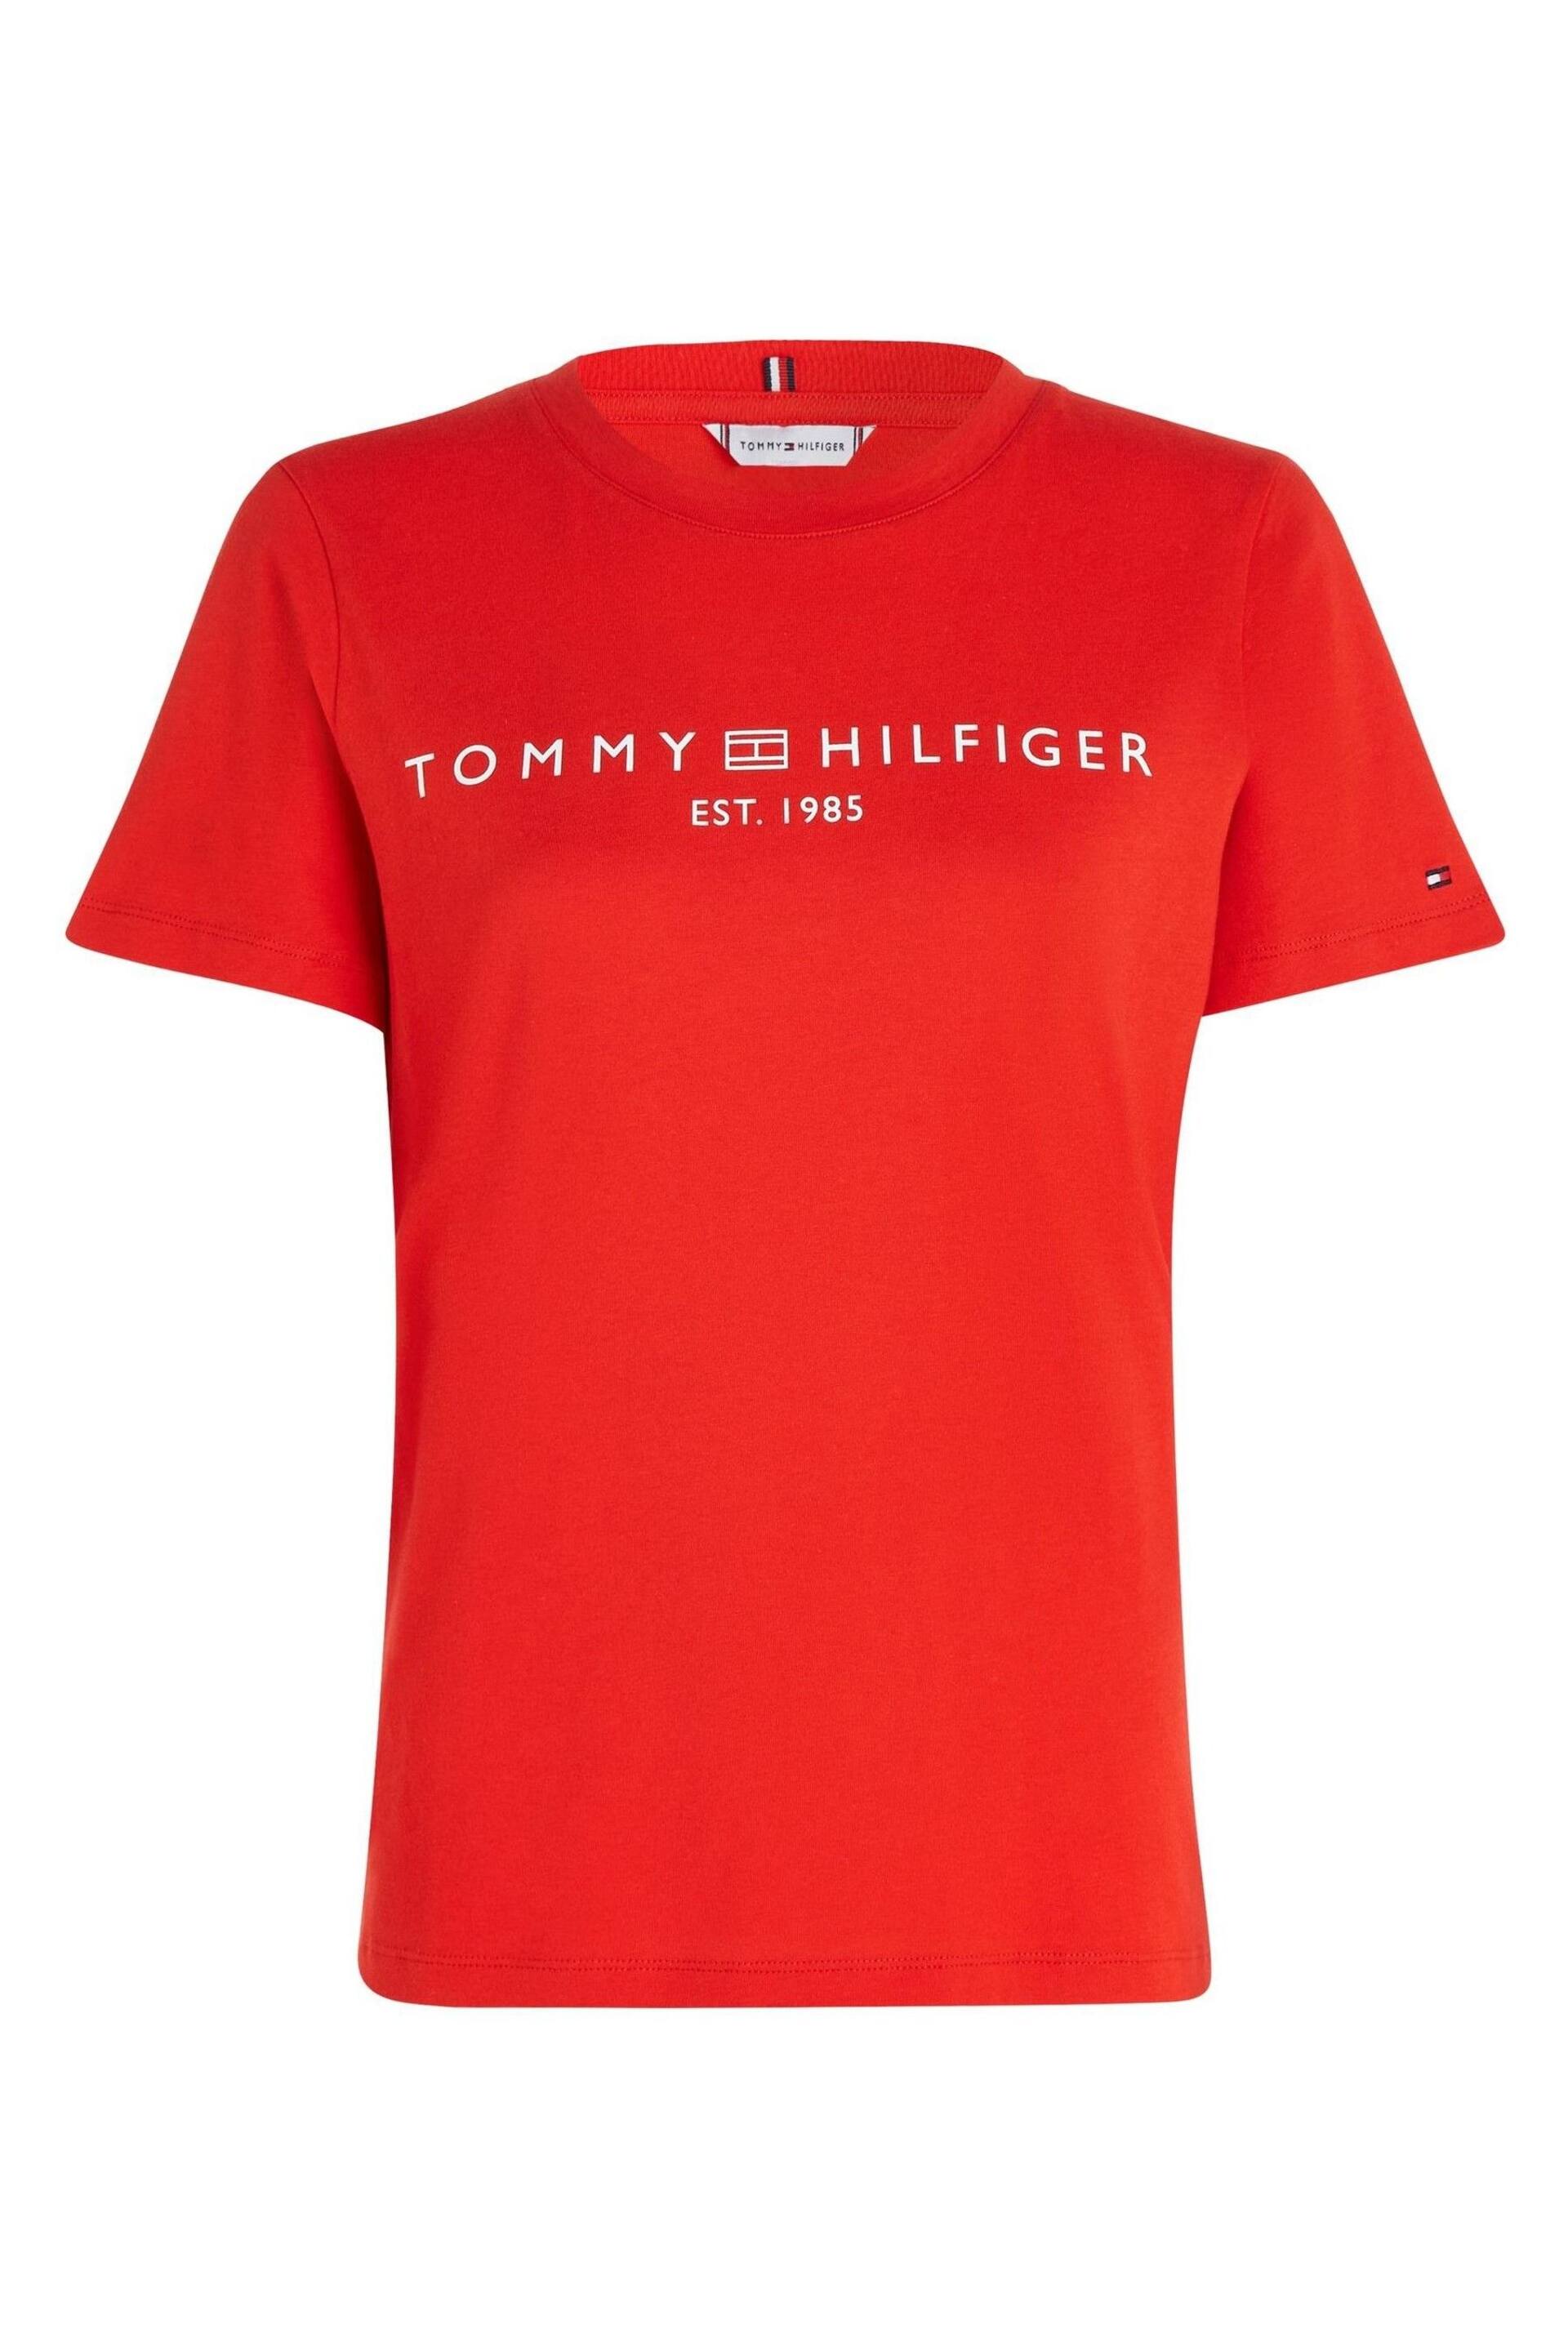 Tommy Hilfiger Red Logo T-Shirt - Image 4 of 6